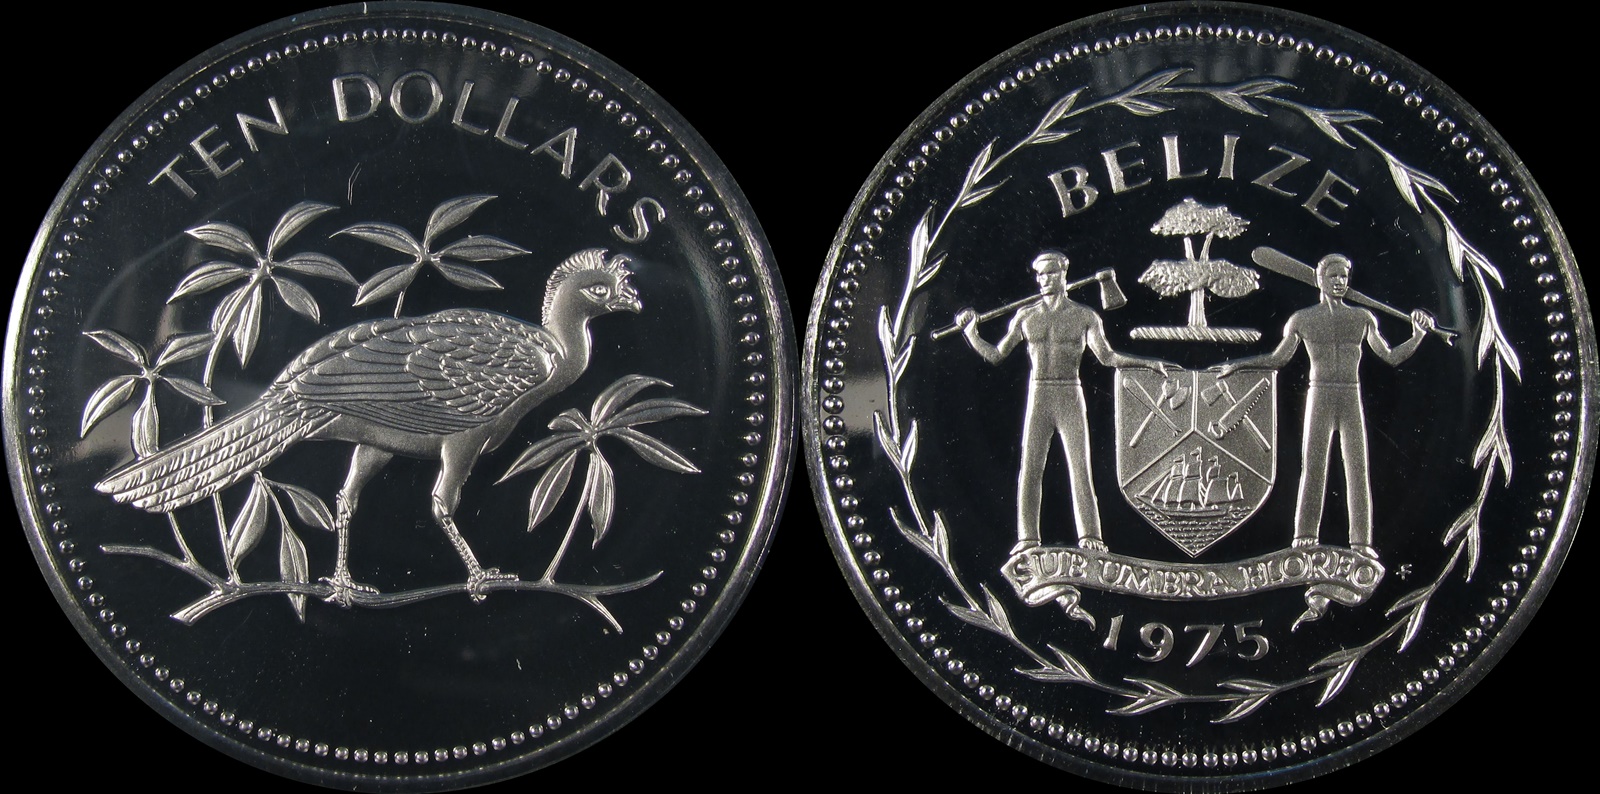 Belize 1975 10 Dollars.jpg